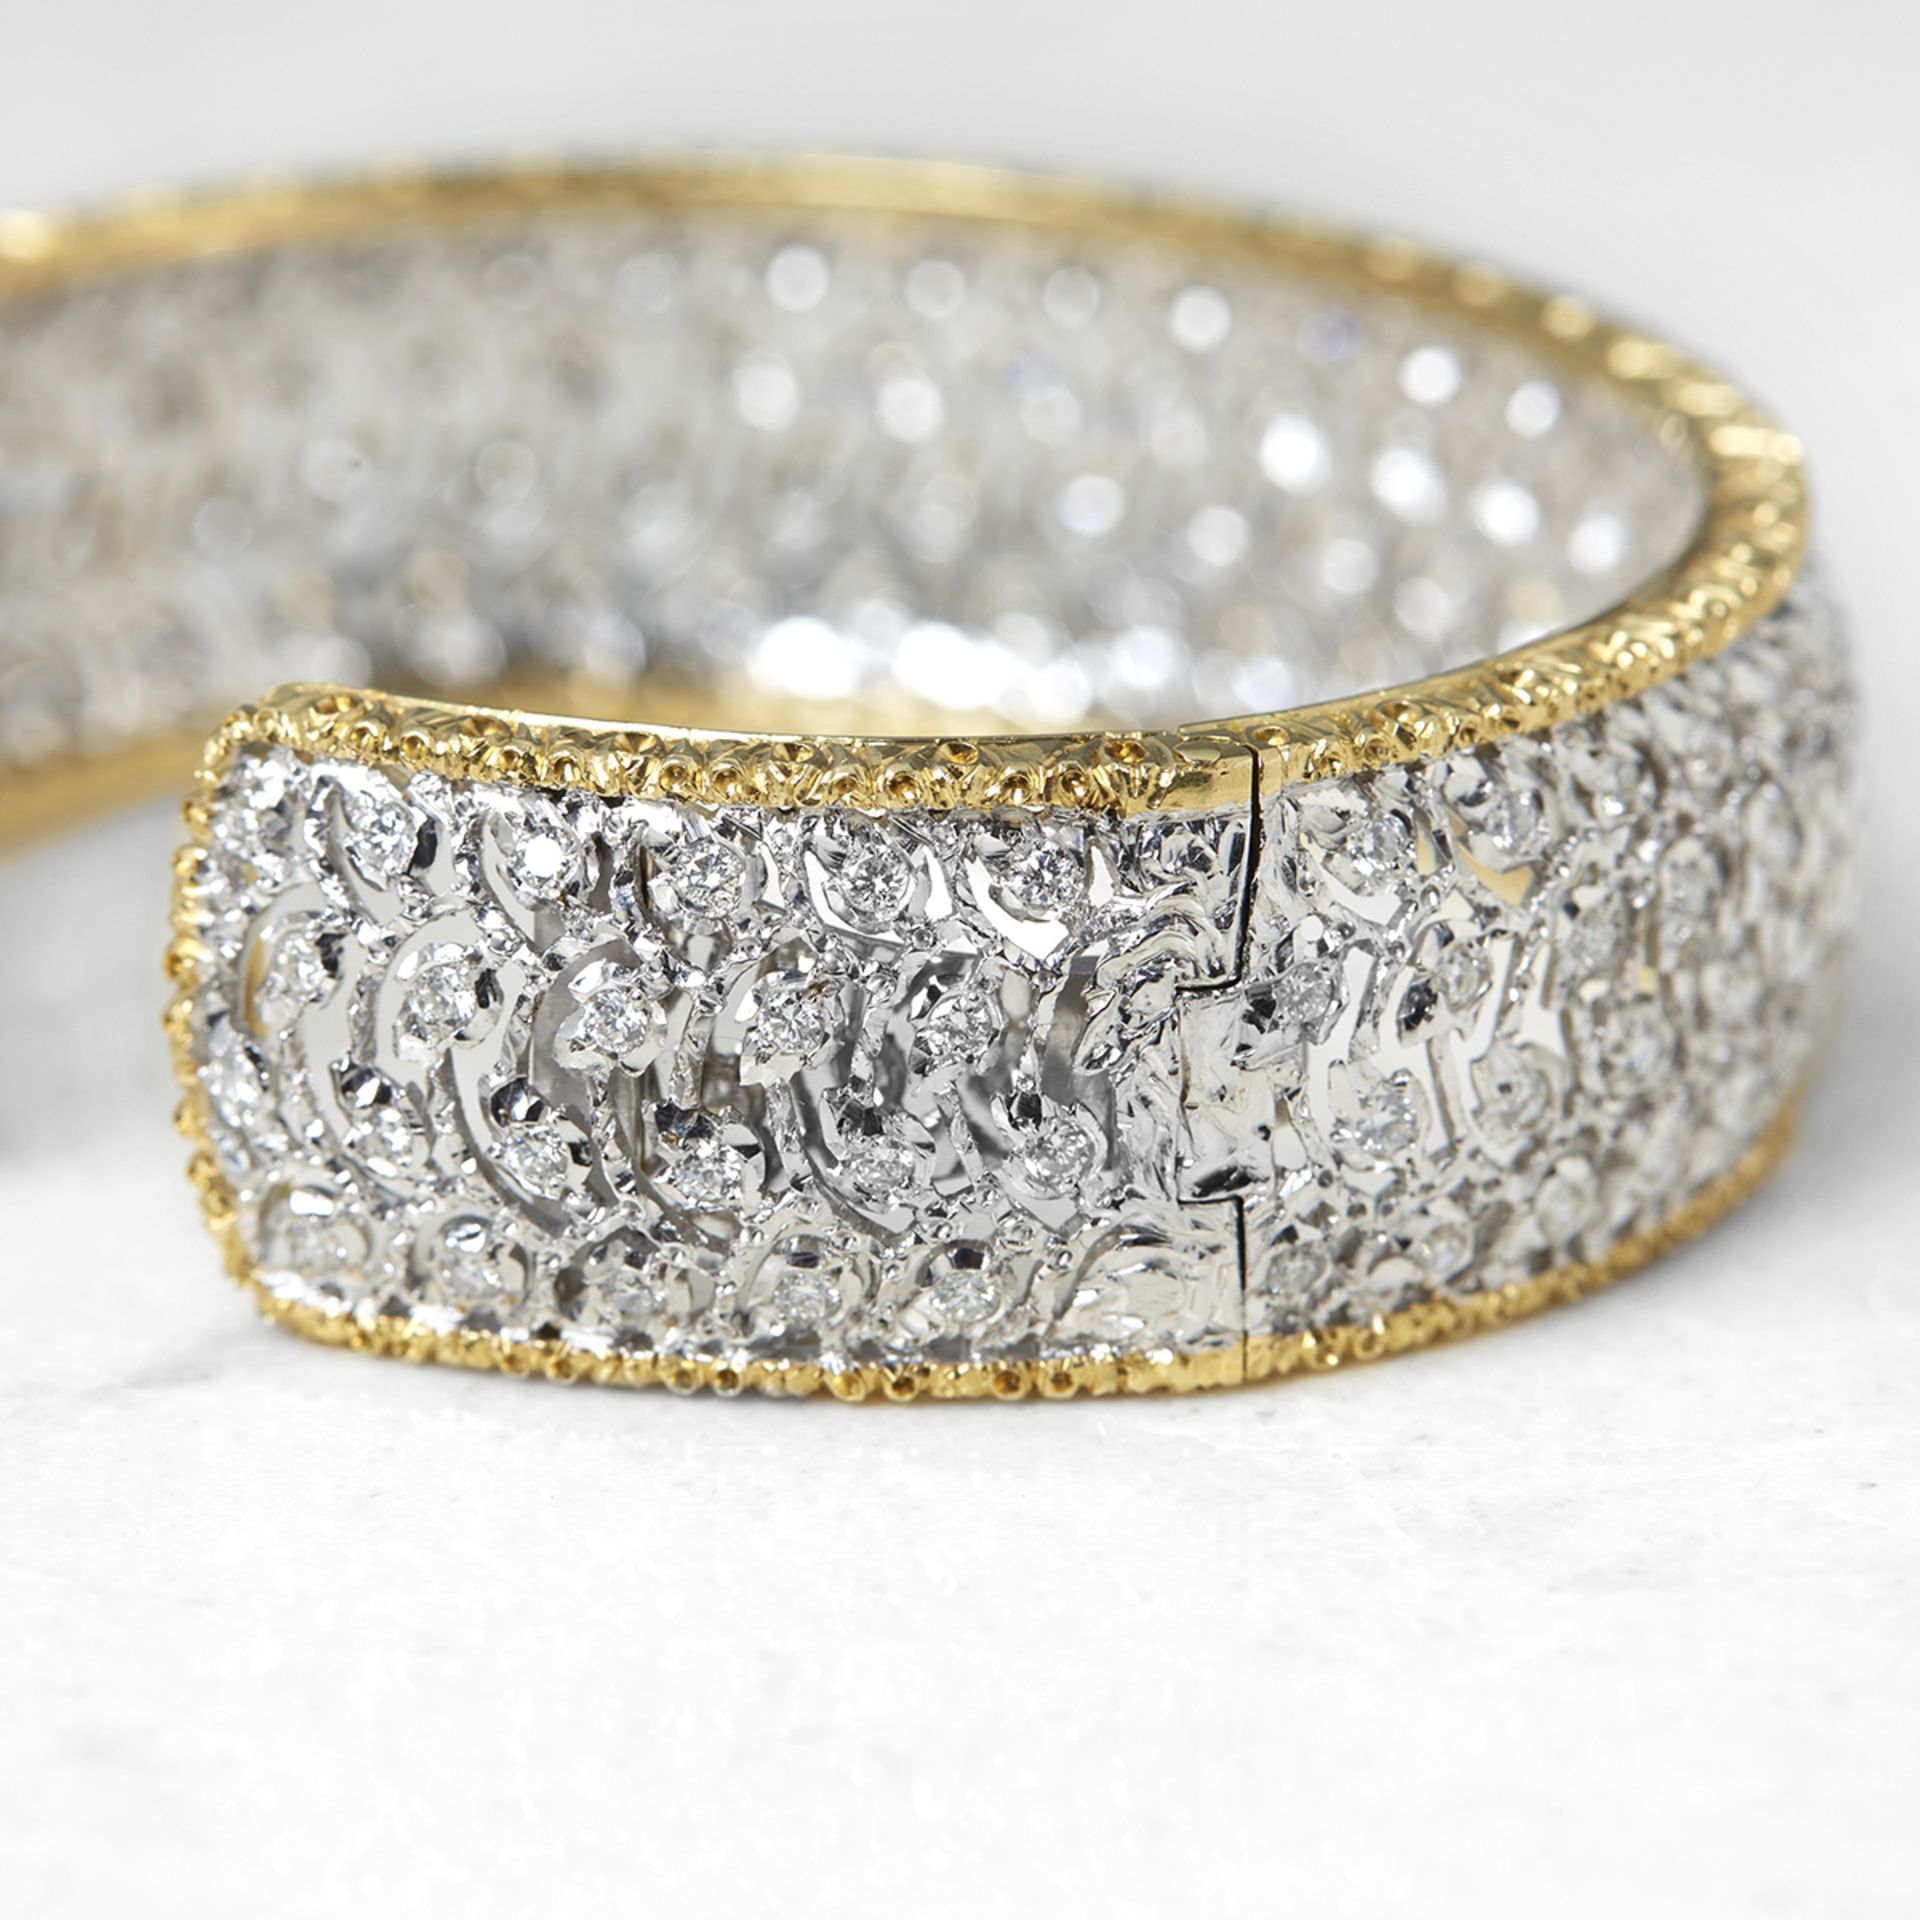 Buccellati 18k White & Yellow Gold 5.00ct Diamond Cuff Bracelet with Presentation Box - Image 4 of 8